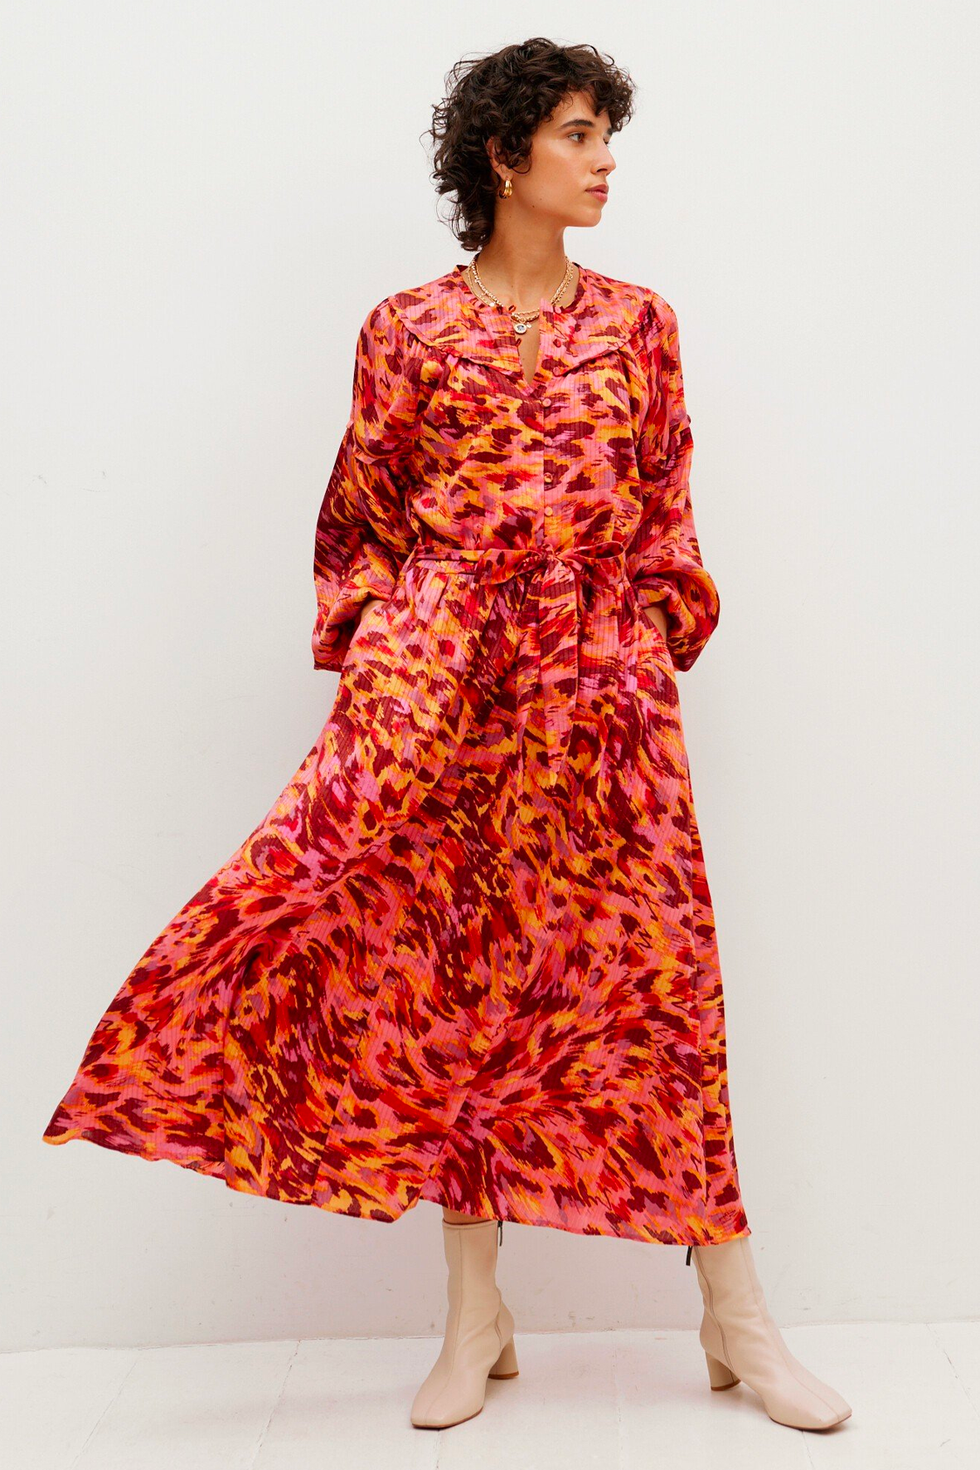 Moving Texture Print Red Midi Dress